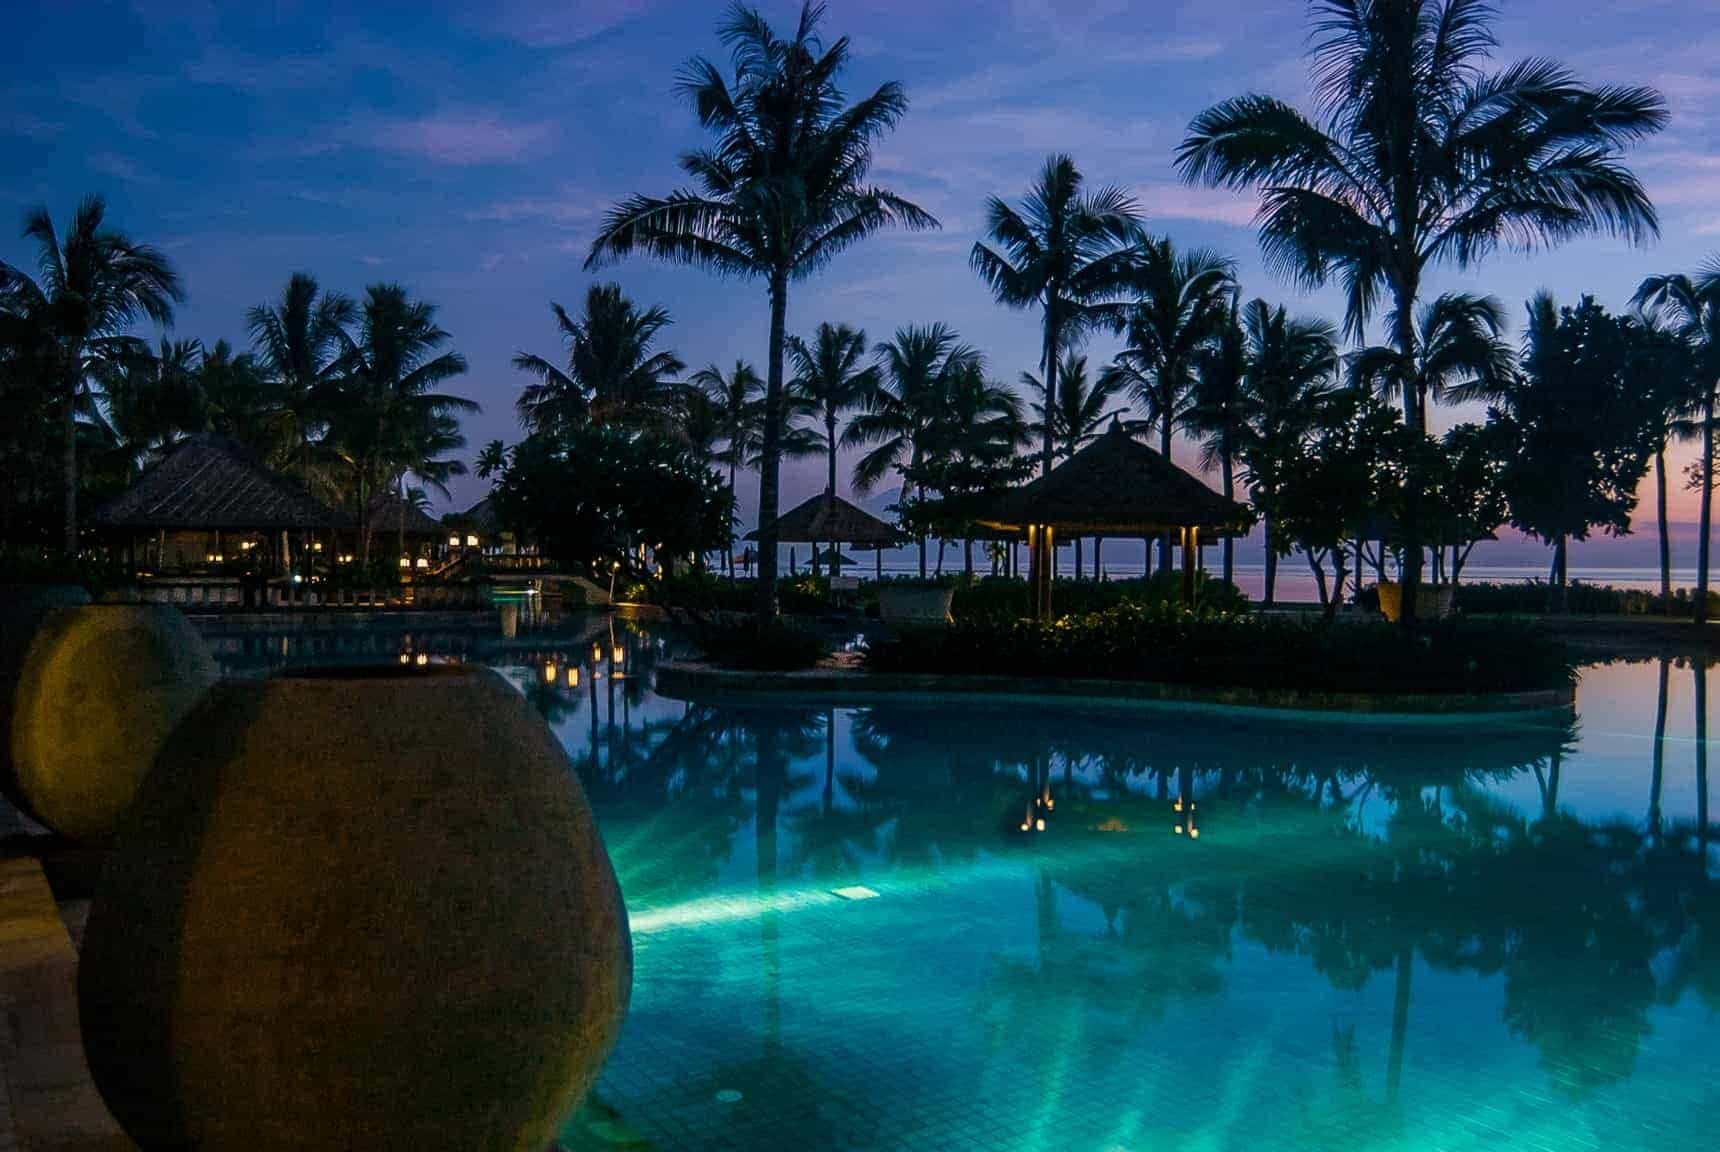 Conrad - Nusa Dua, Bali Indonesia (Bali hotel photography by master photographer Rick Carmichael of LuxViz)